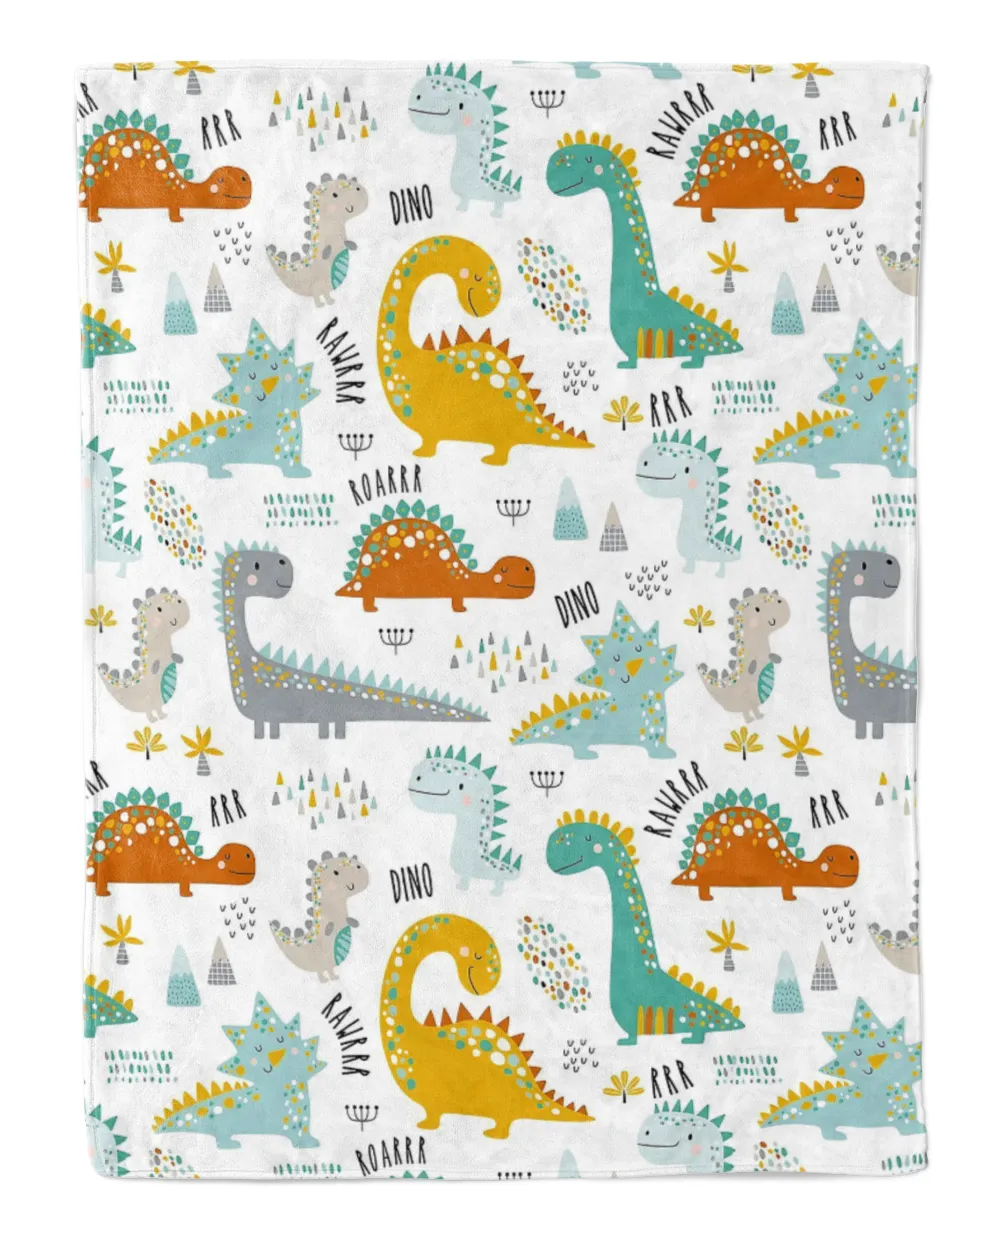 Dinosaurus Blanklet, Dinosaurus Fleece Blanket, Blanket Funny Pattern, Blanket For Baby